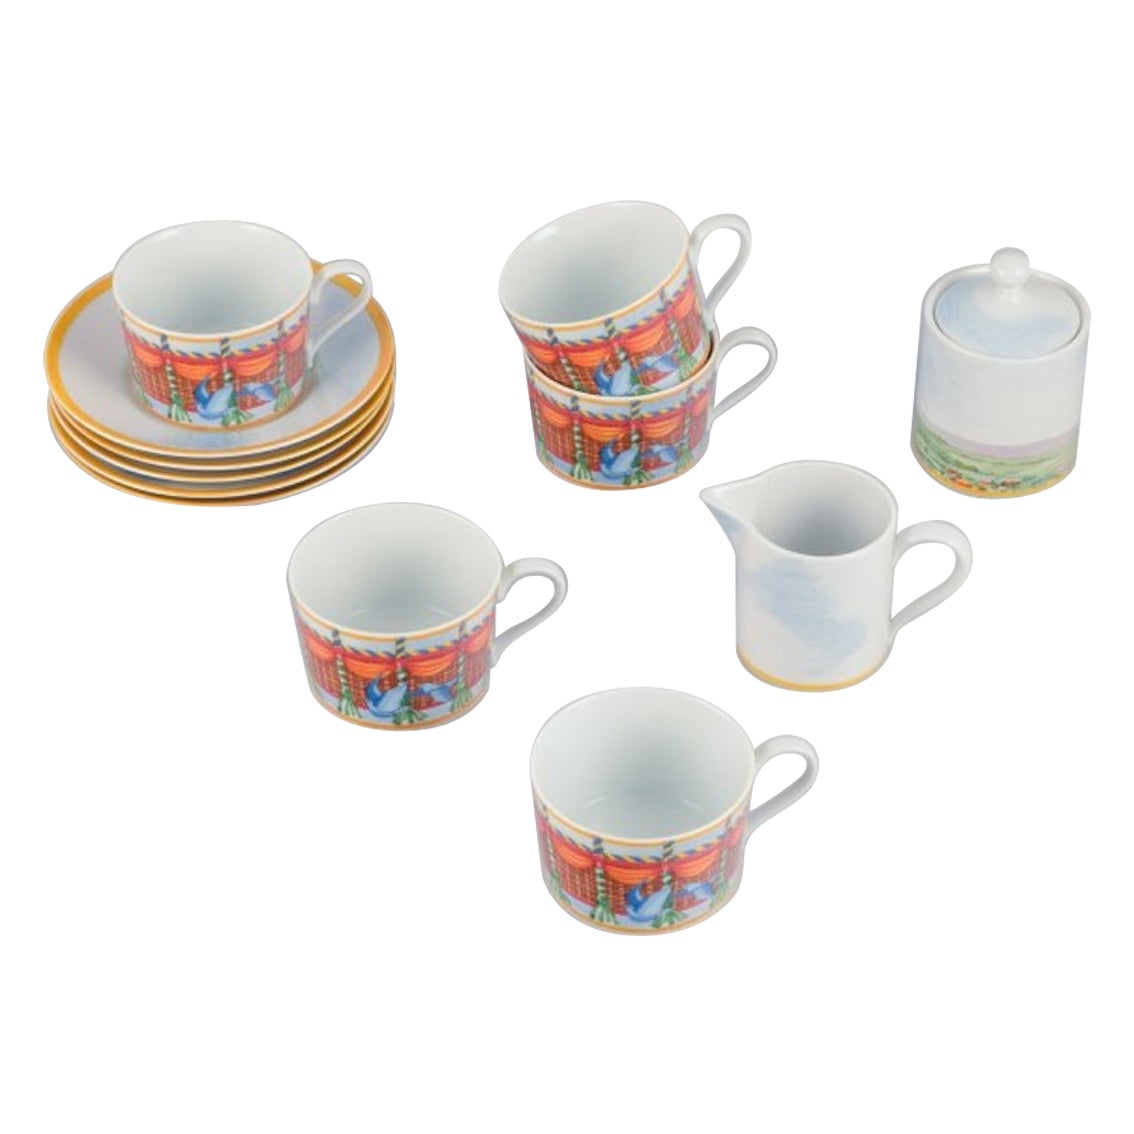 Williams-Sonoma Fine Porcelain. A five-person Montgolfiére coffee set For Sale